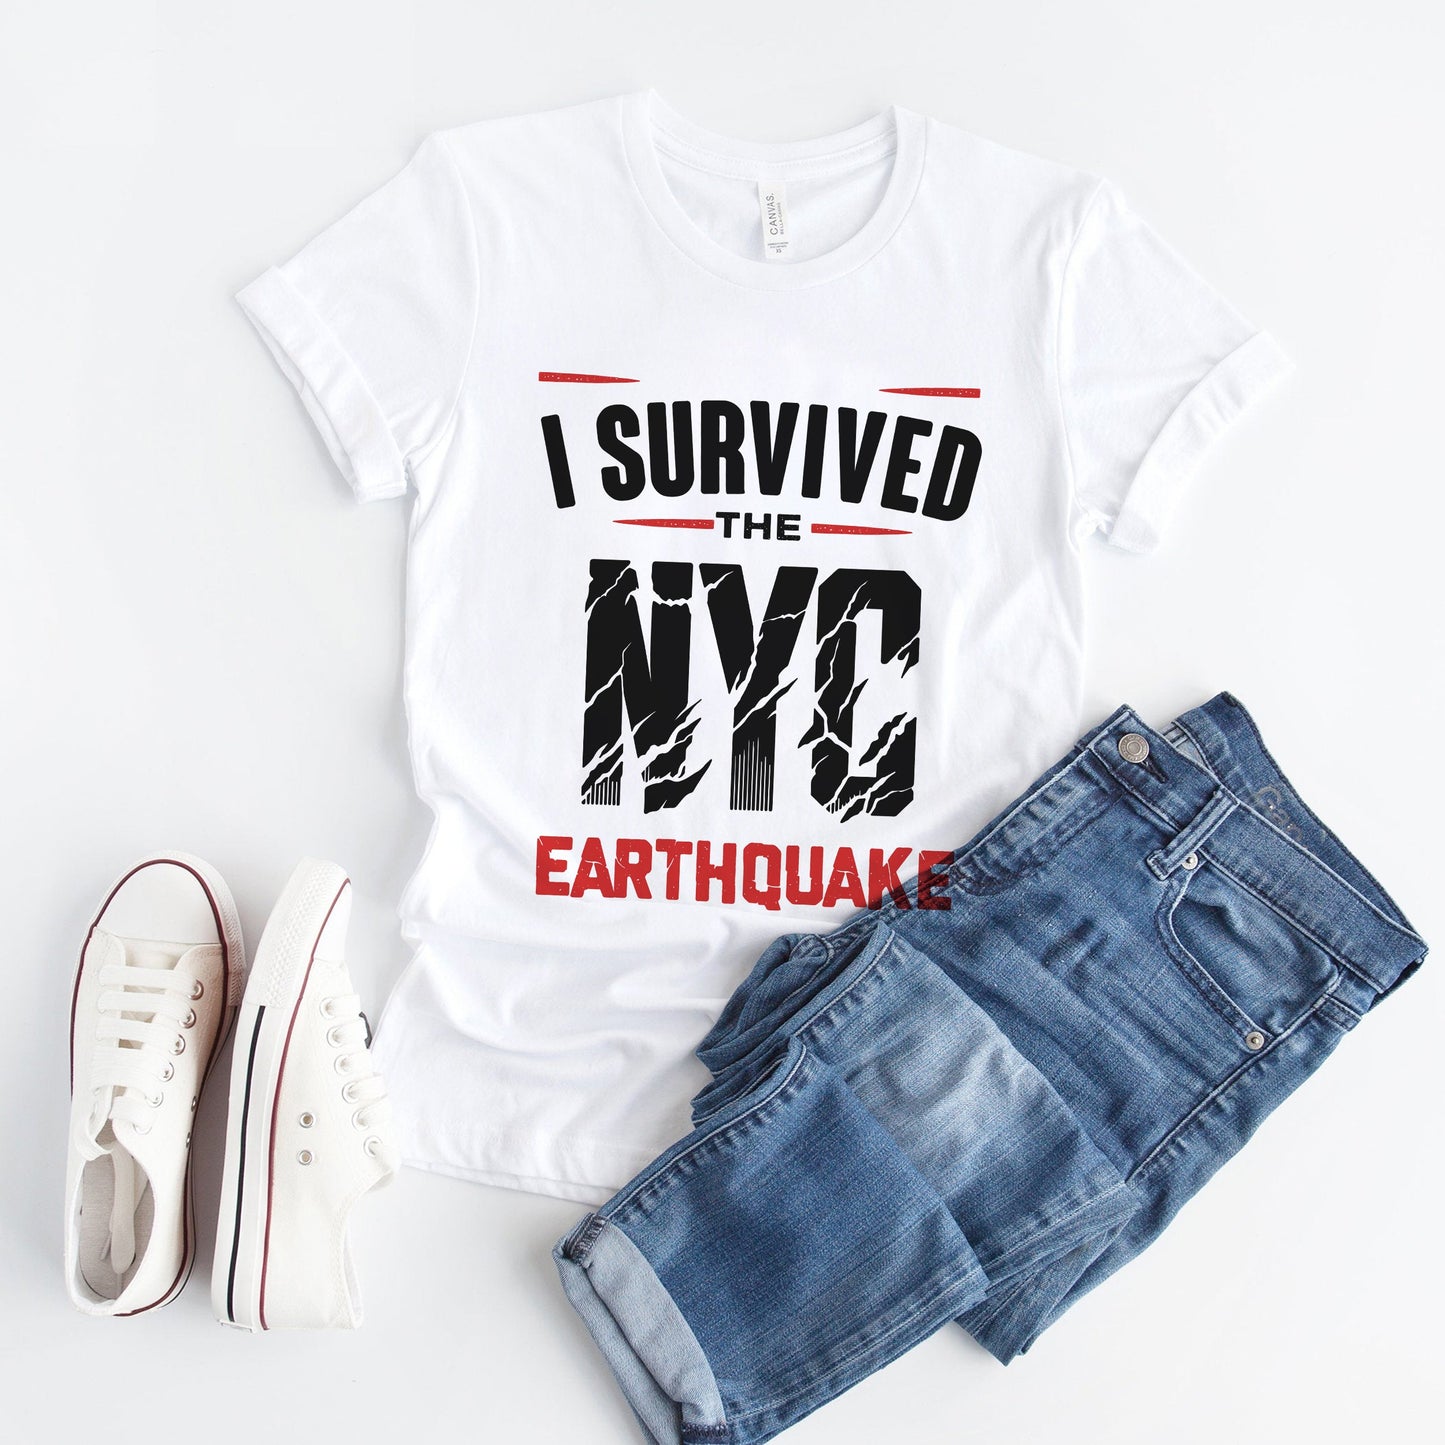 I Survived NYC Earthquake, White T-Shirt